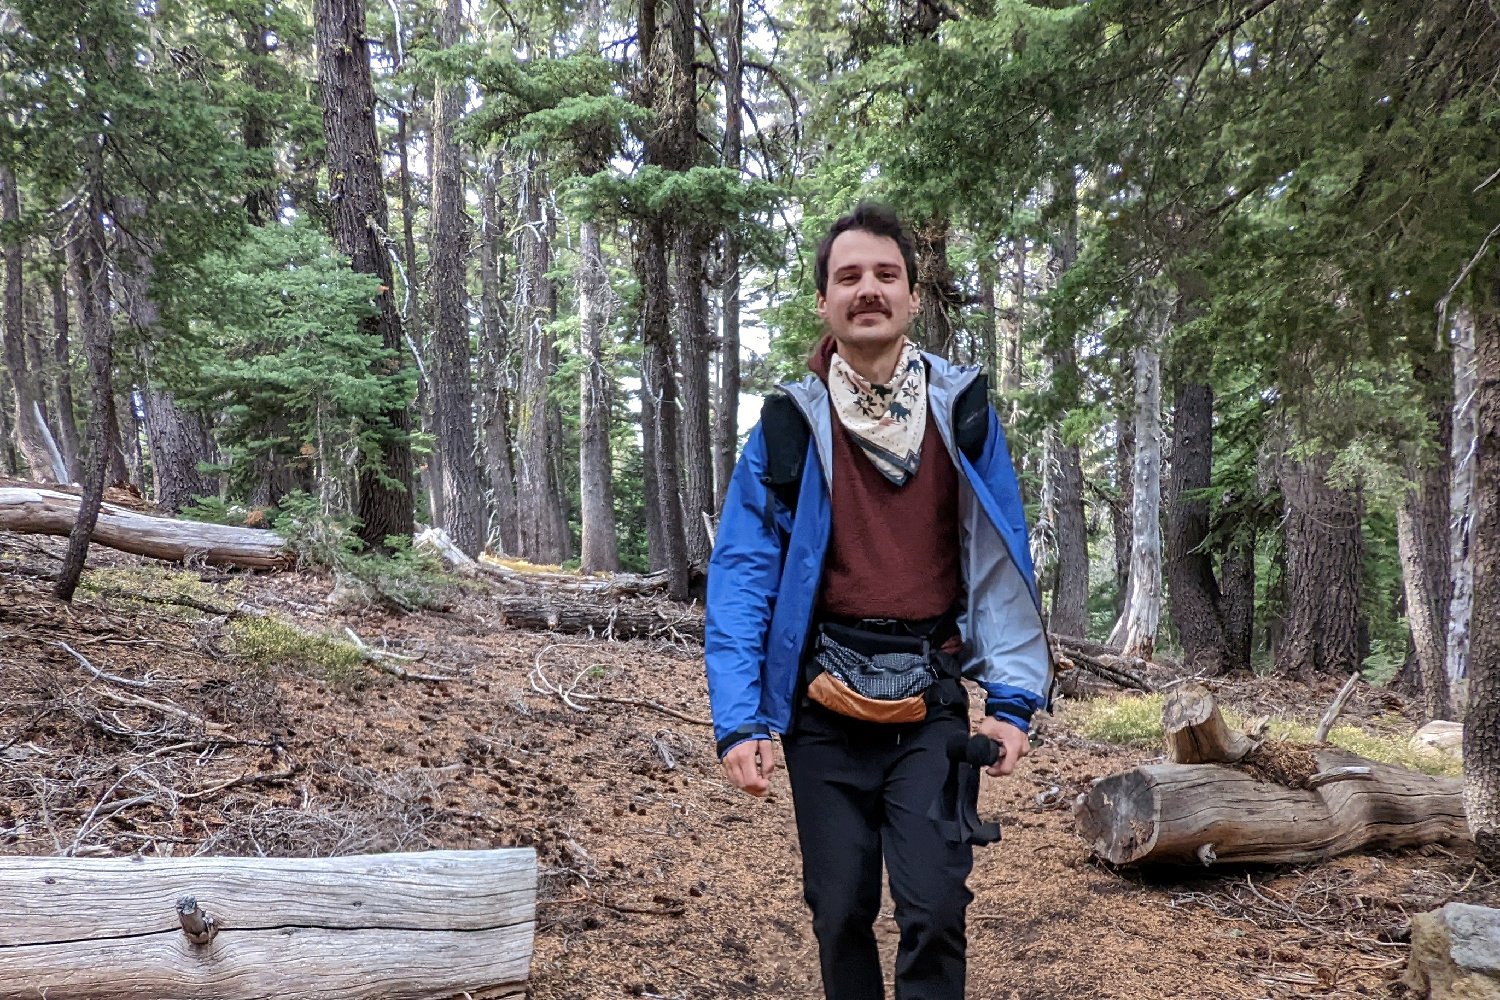 A hiker walking on a trail wearing the Enlightened Equipment Visp rain jacket unzipped